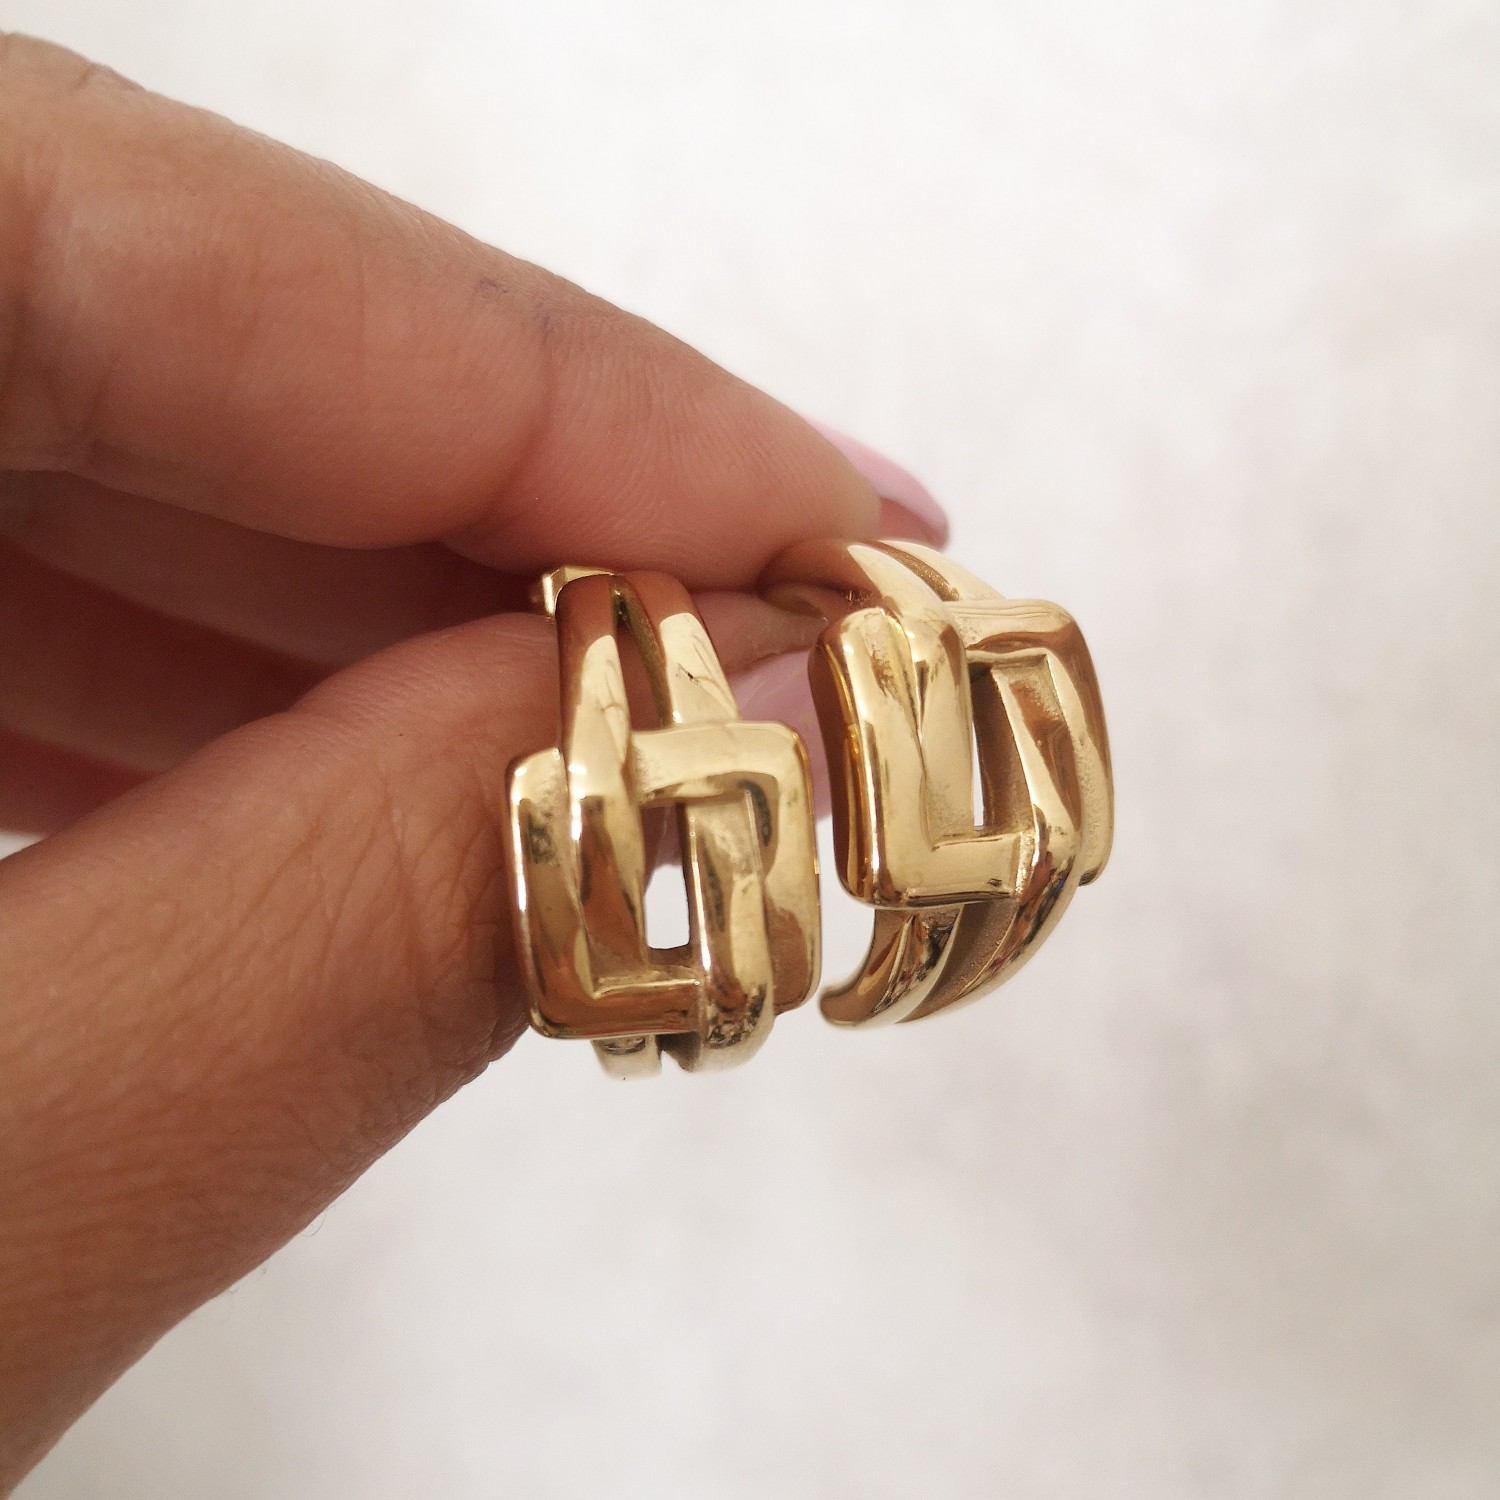 STAINLESS STEEL σκουλαρίκια ιδιαίτερο σχέδιο σε κίτρινο χρυσό.